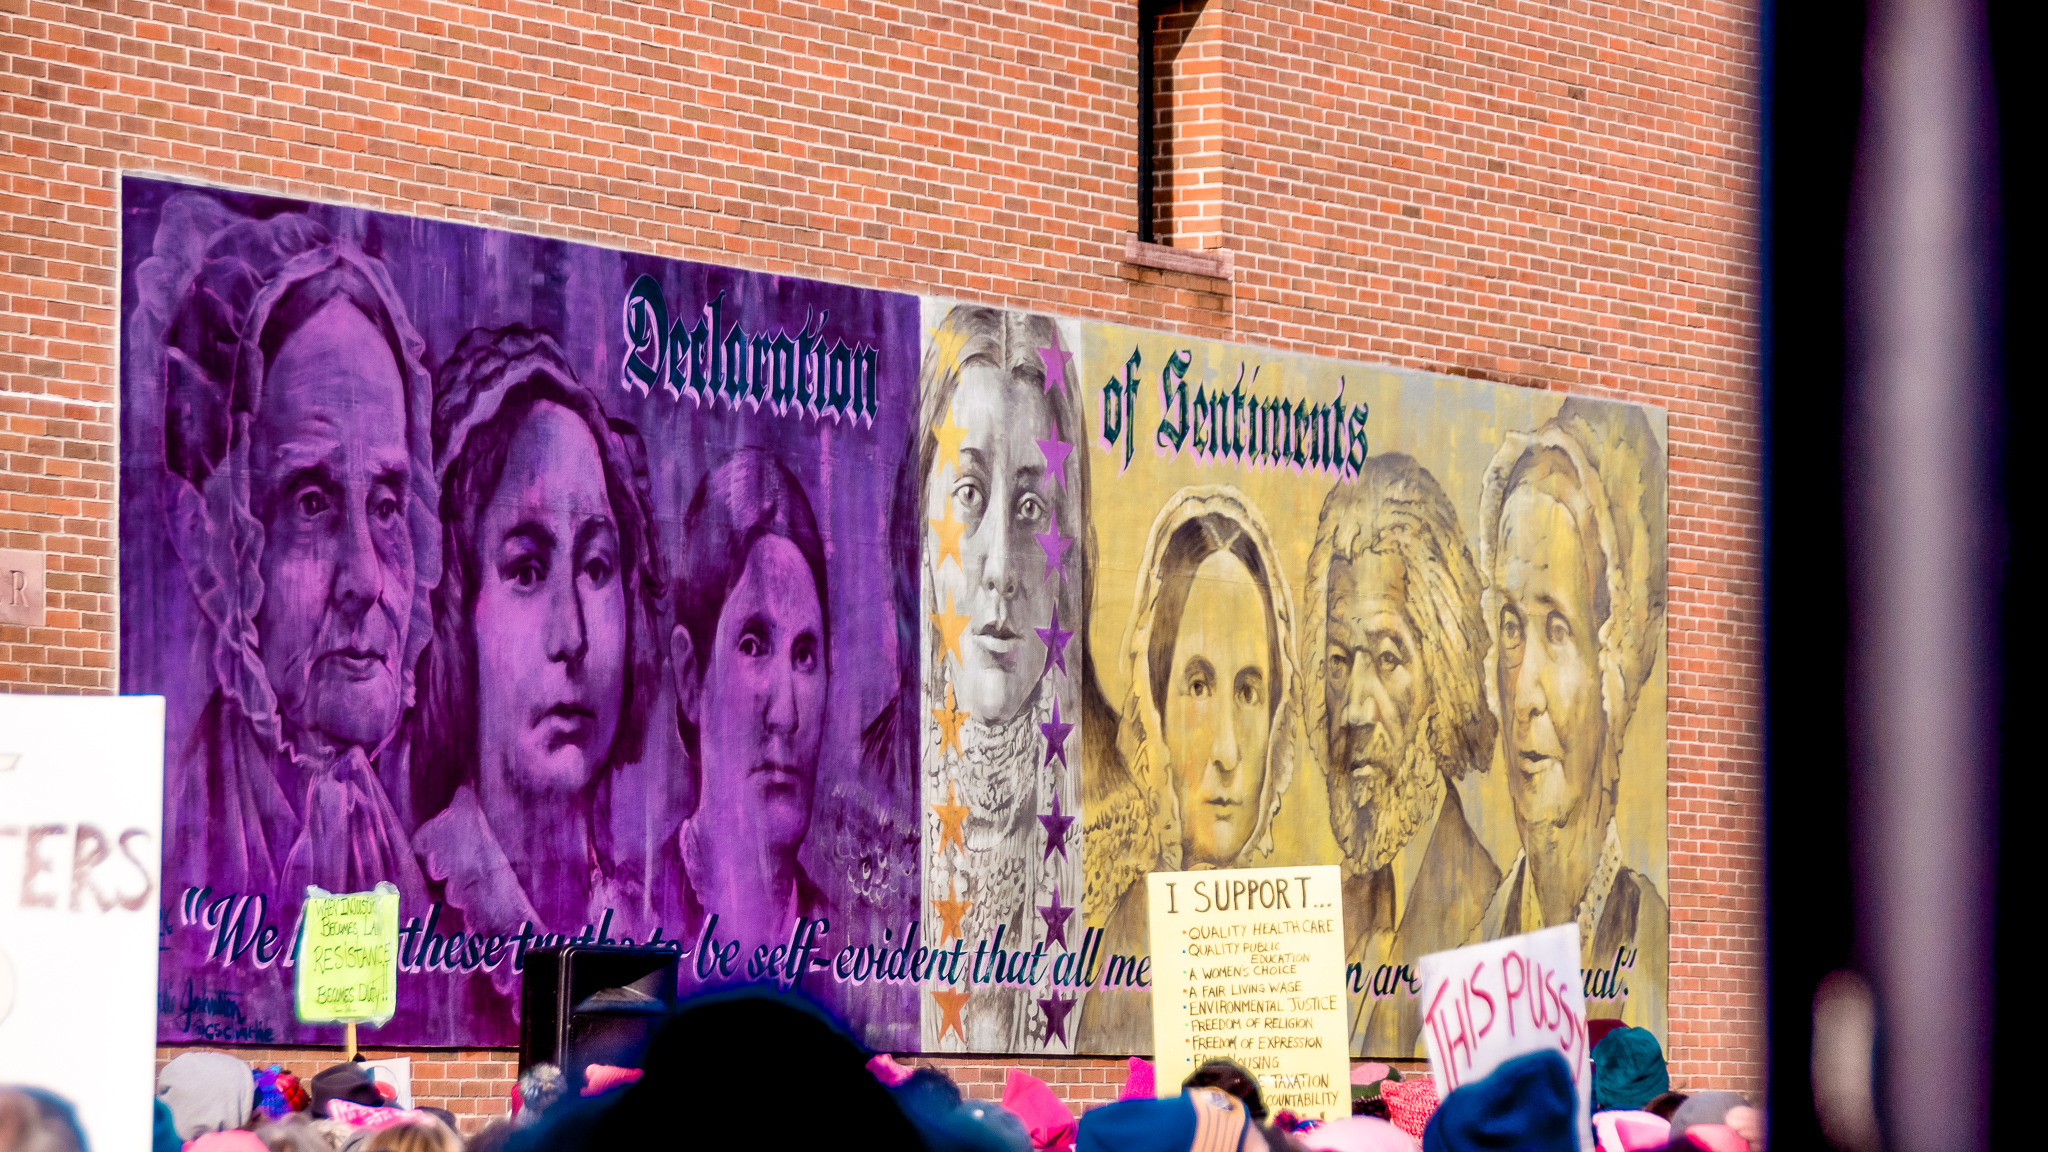 Seneca Falls Convention poster amongst women's protest